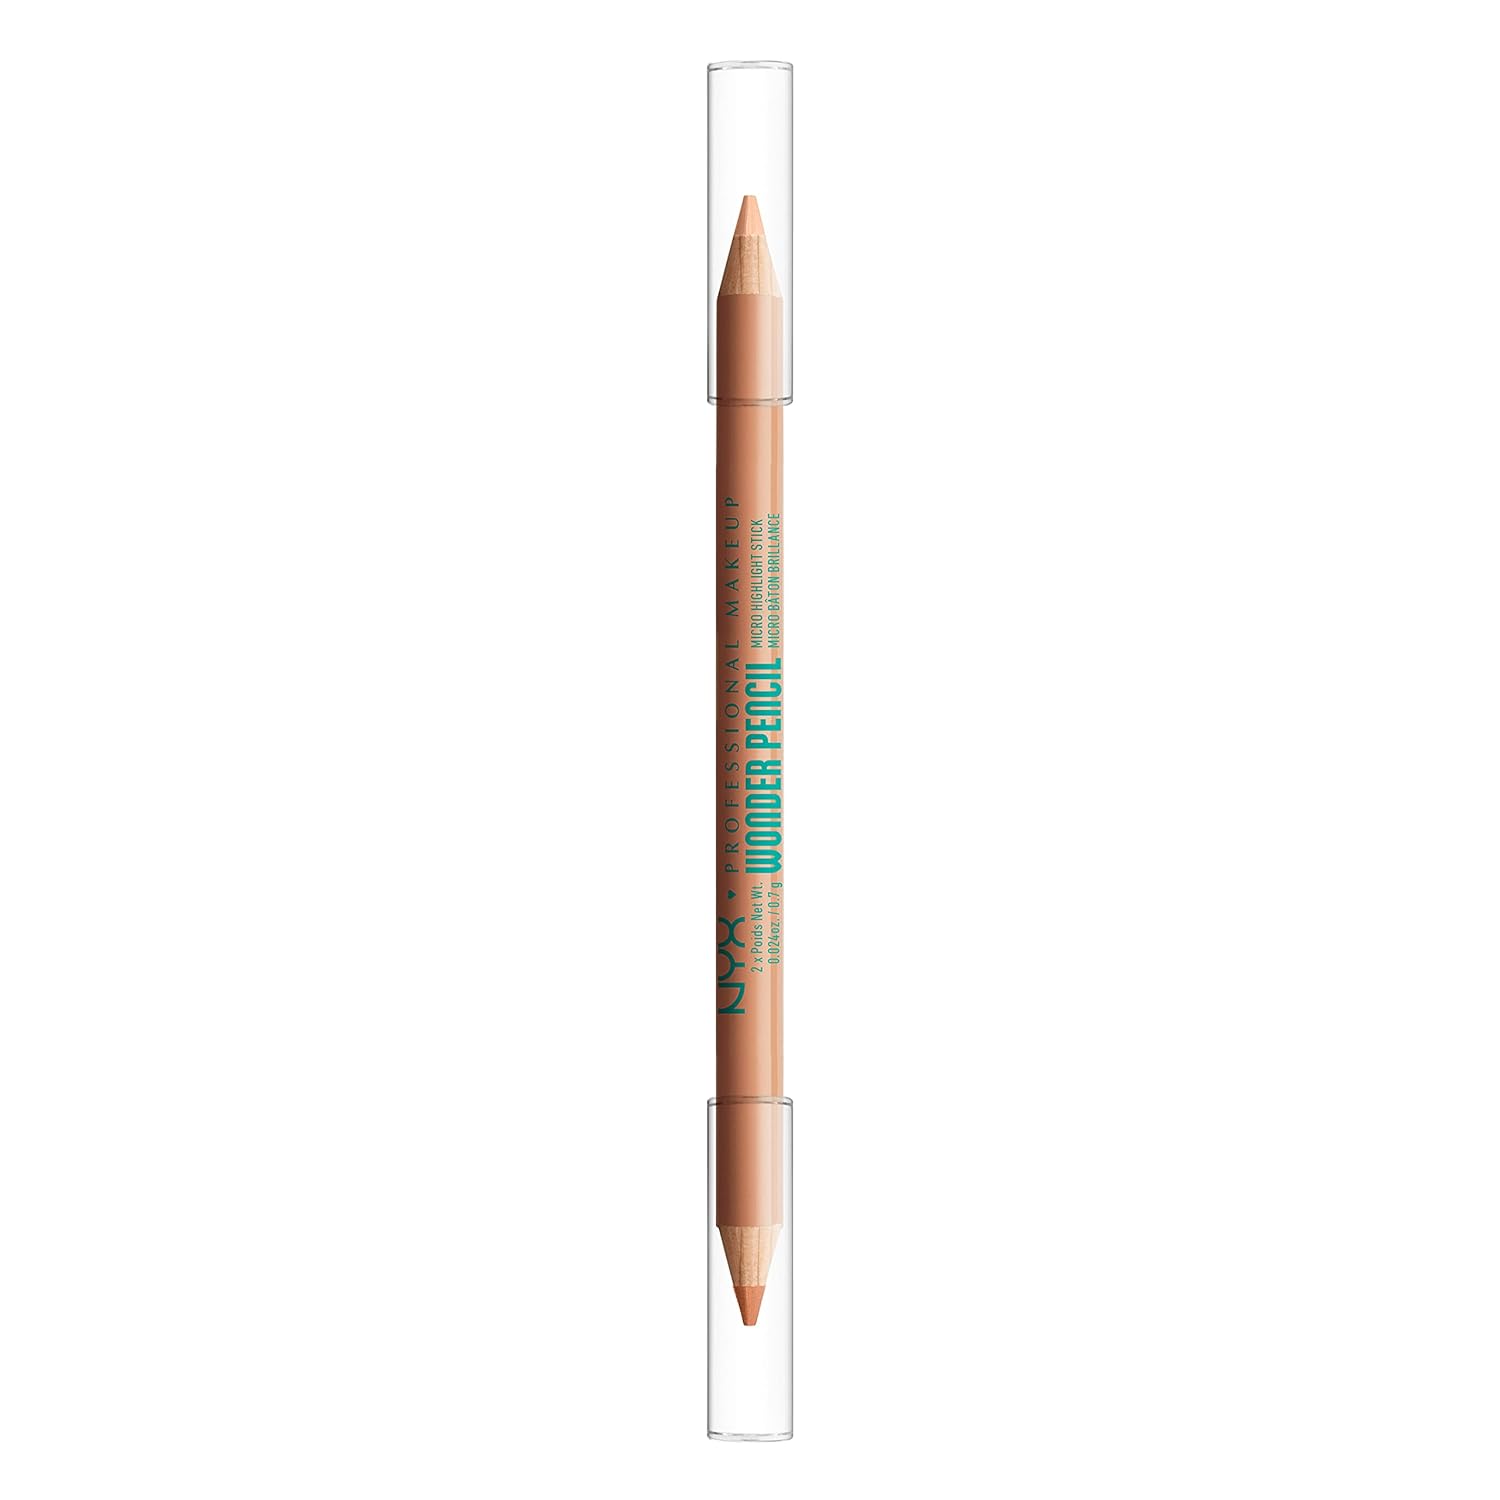 NYX PROFESSIONAL MAKEUP Wonder Pencil, Multi-Use Micro Highlighter & Concealer Stick - Warm Deep